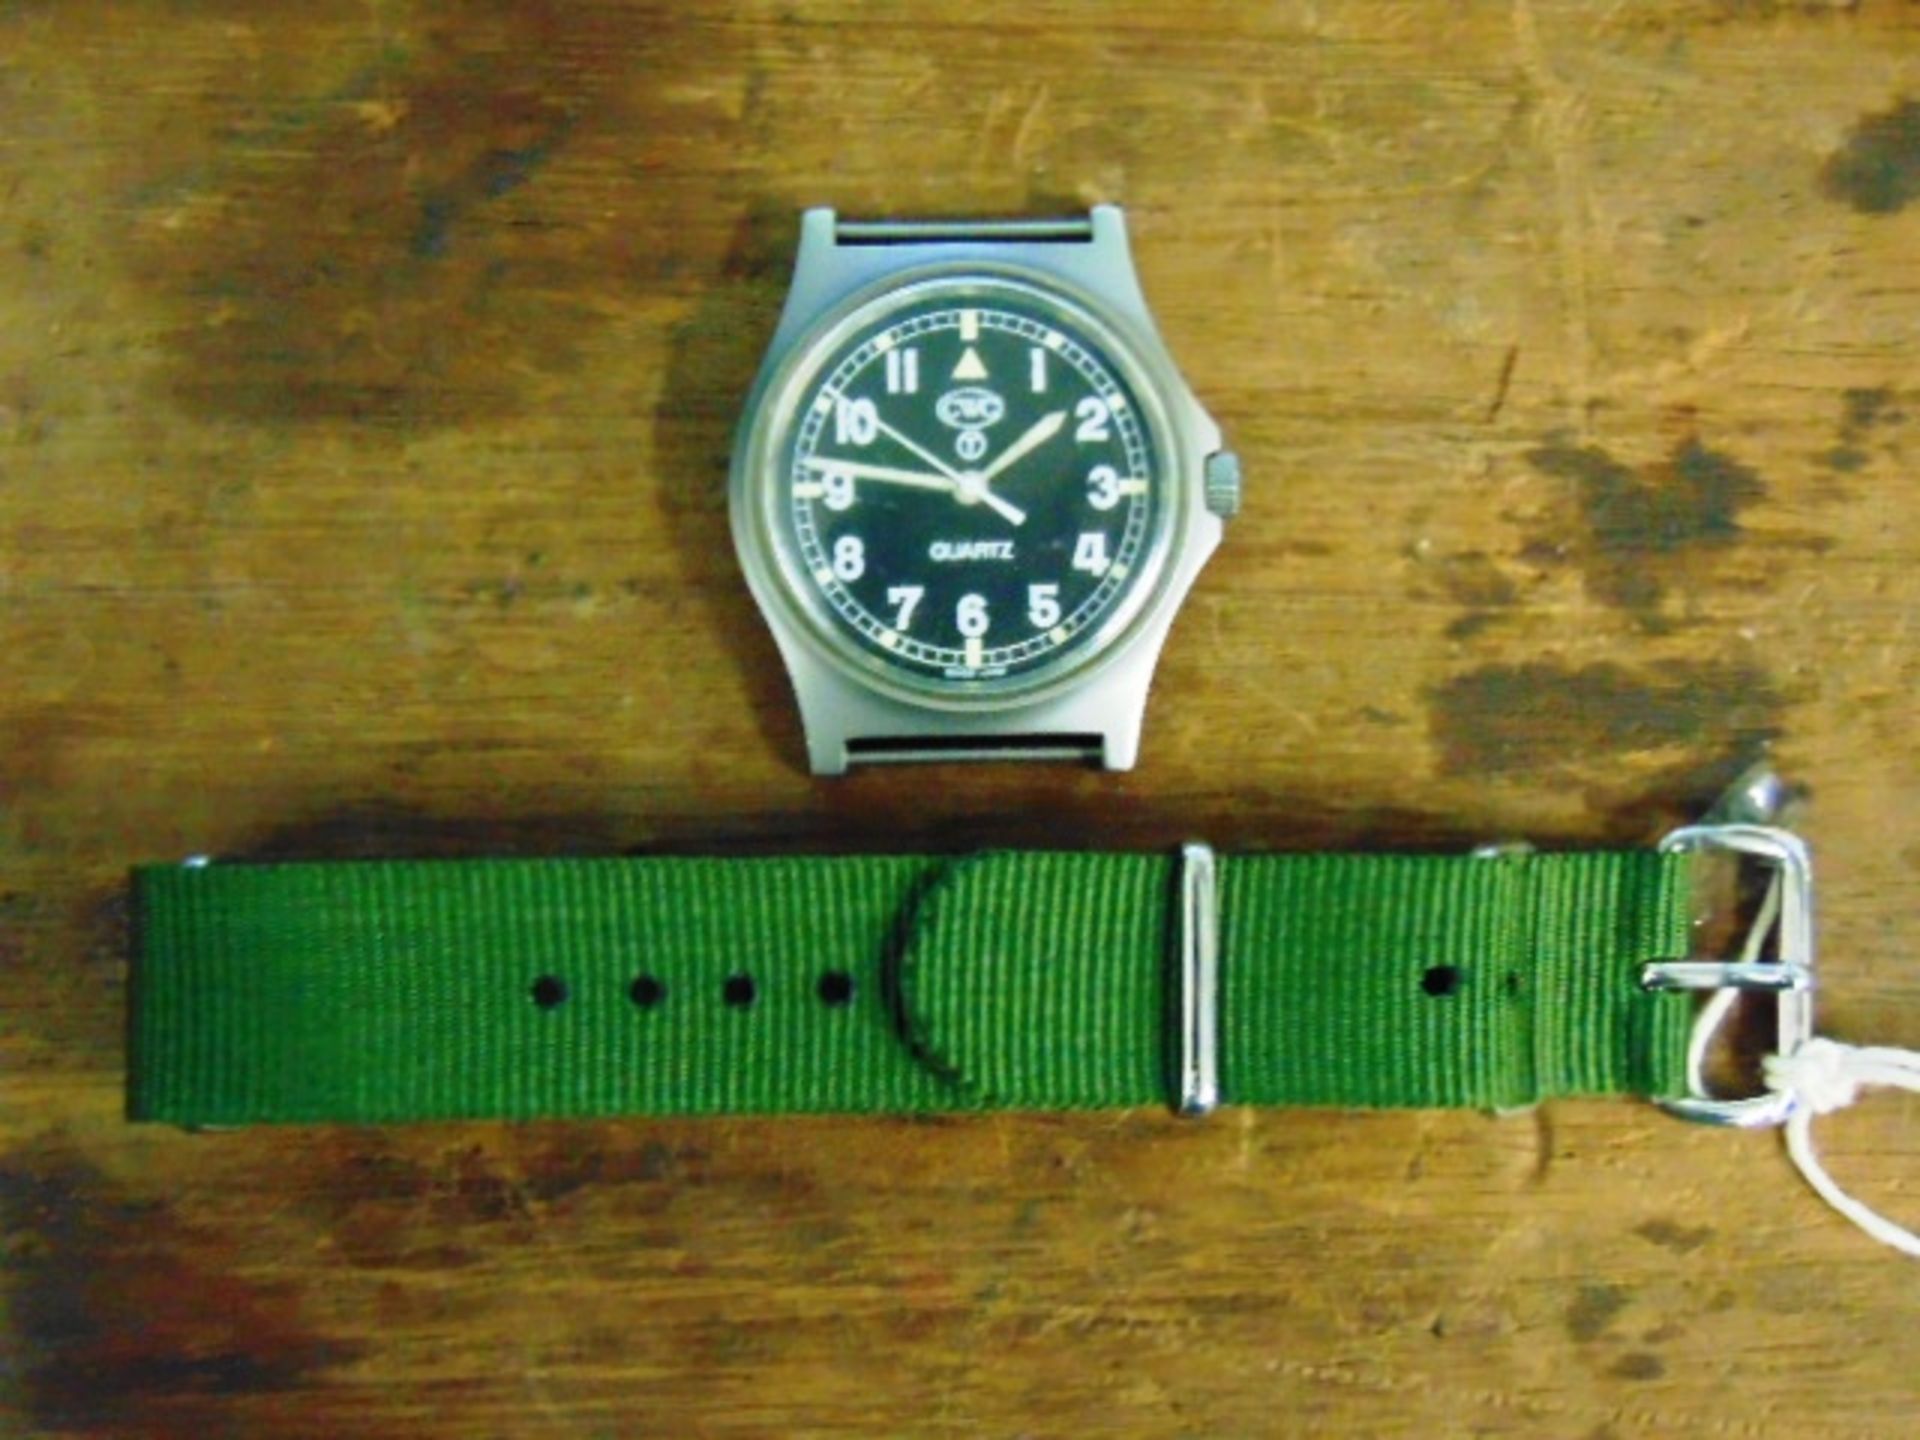 Genuine British Army, CWC quartz wrist watch - Image 3 of 6